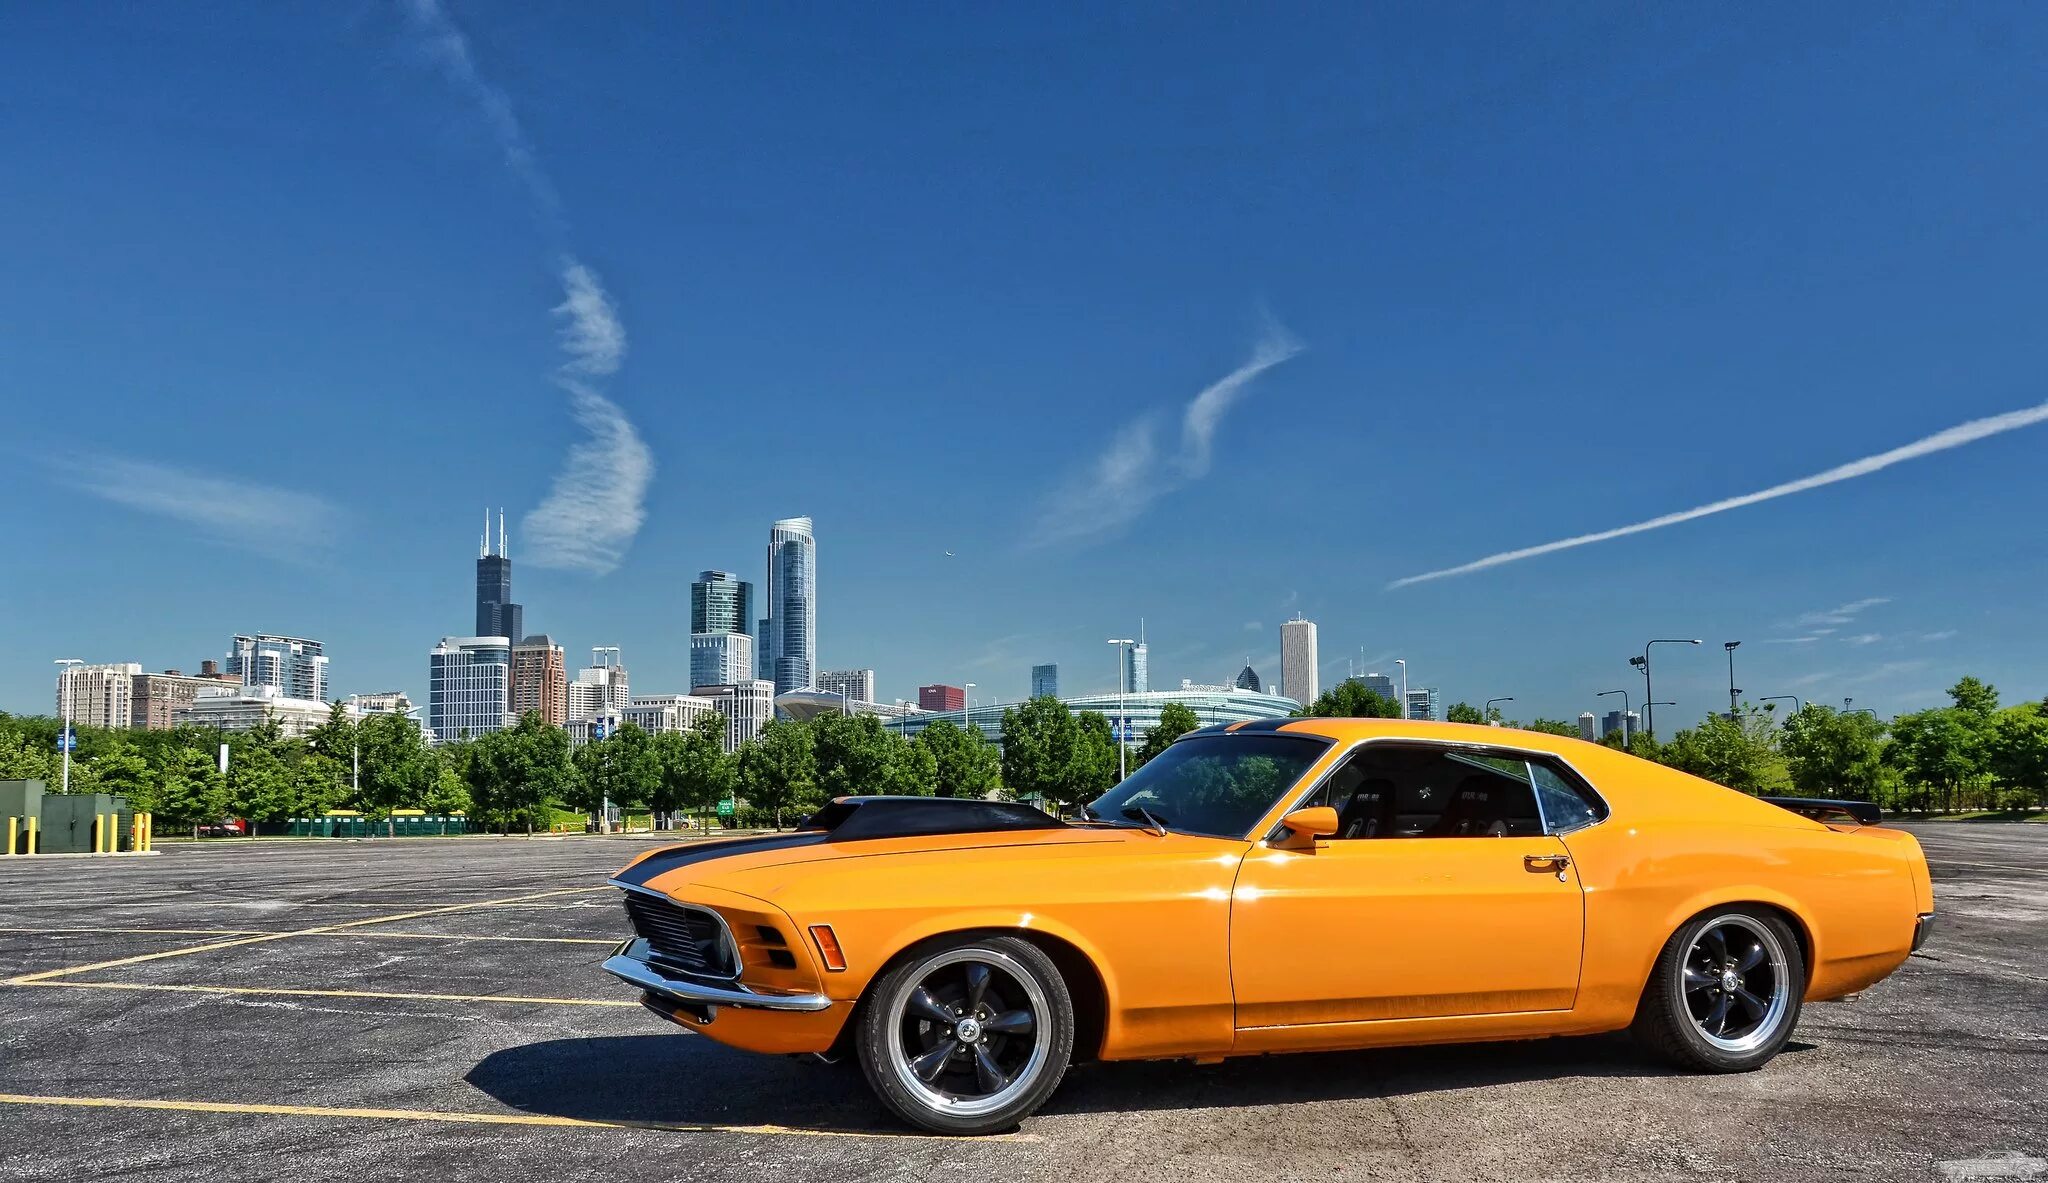 Мустанг Маслкар 1970. Желтый Мустанг 1969. Ford Mustang muscle car. Форд Мустанг 70 года. Мощь машины